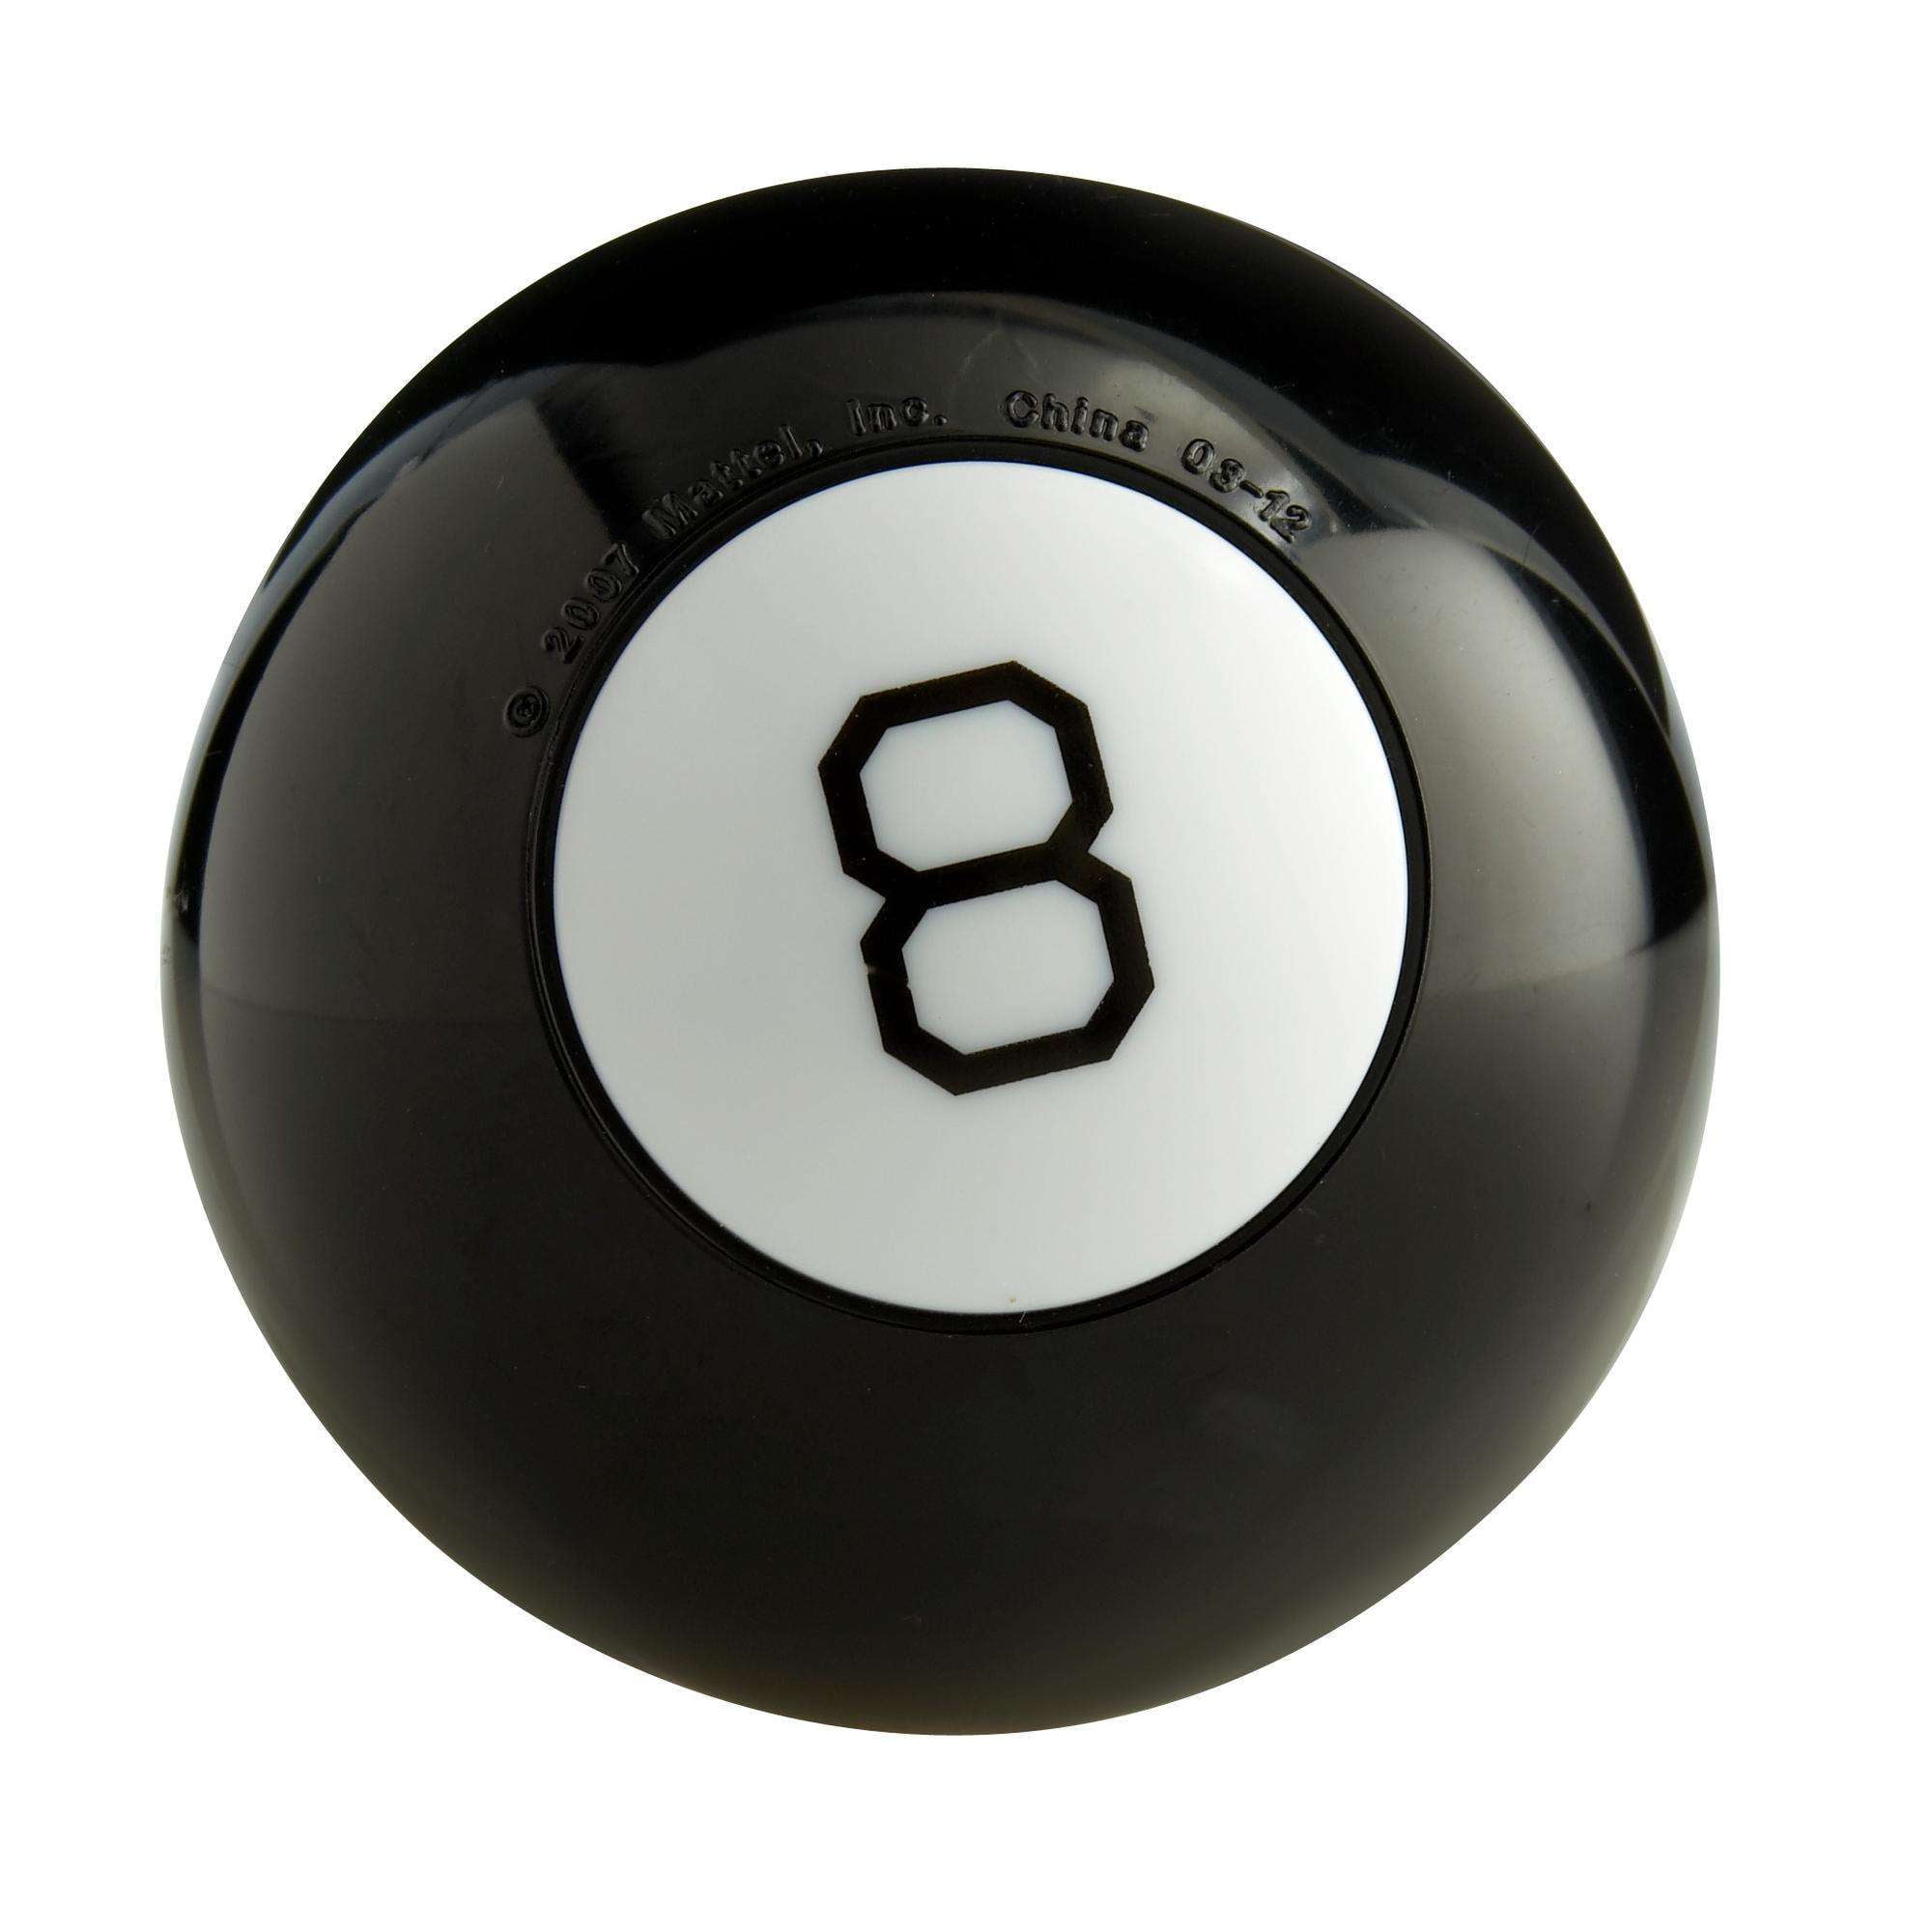 magic 8 ball icon